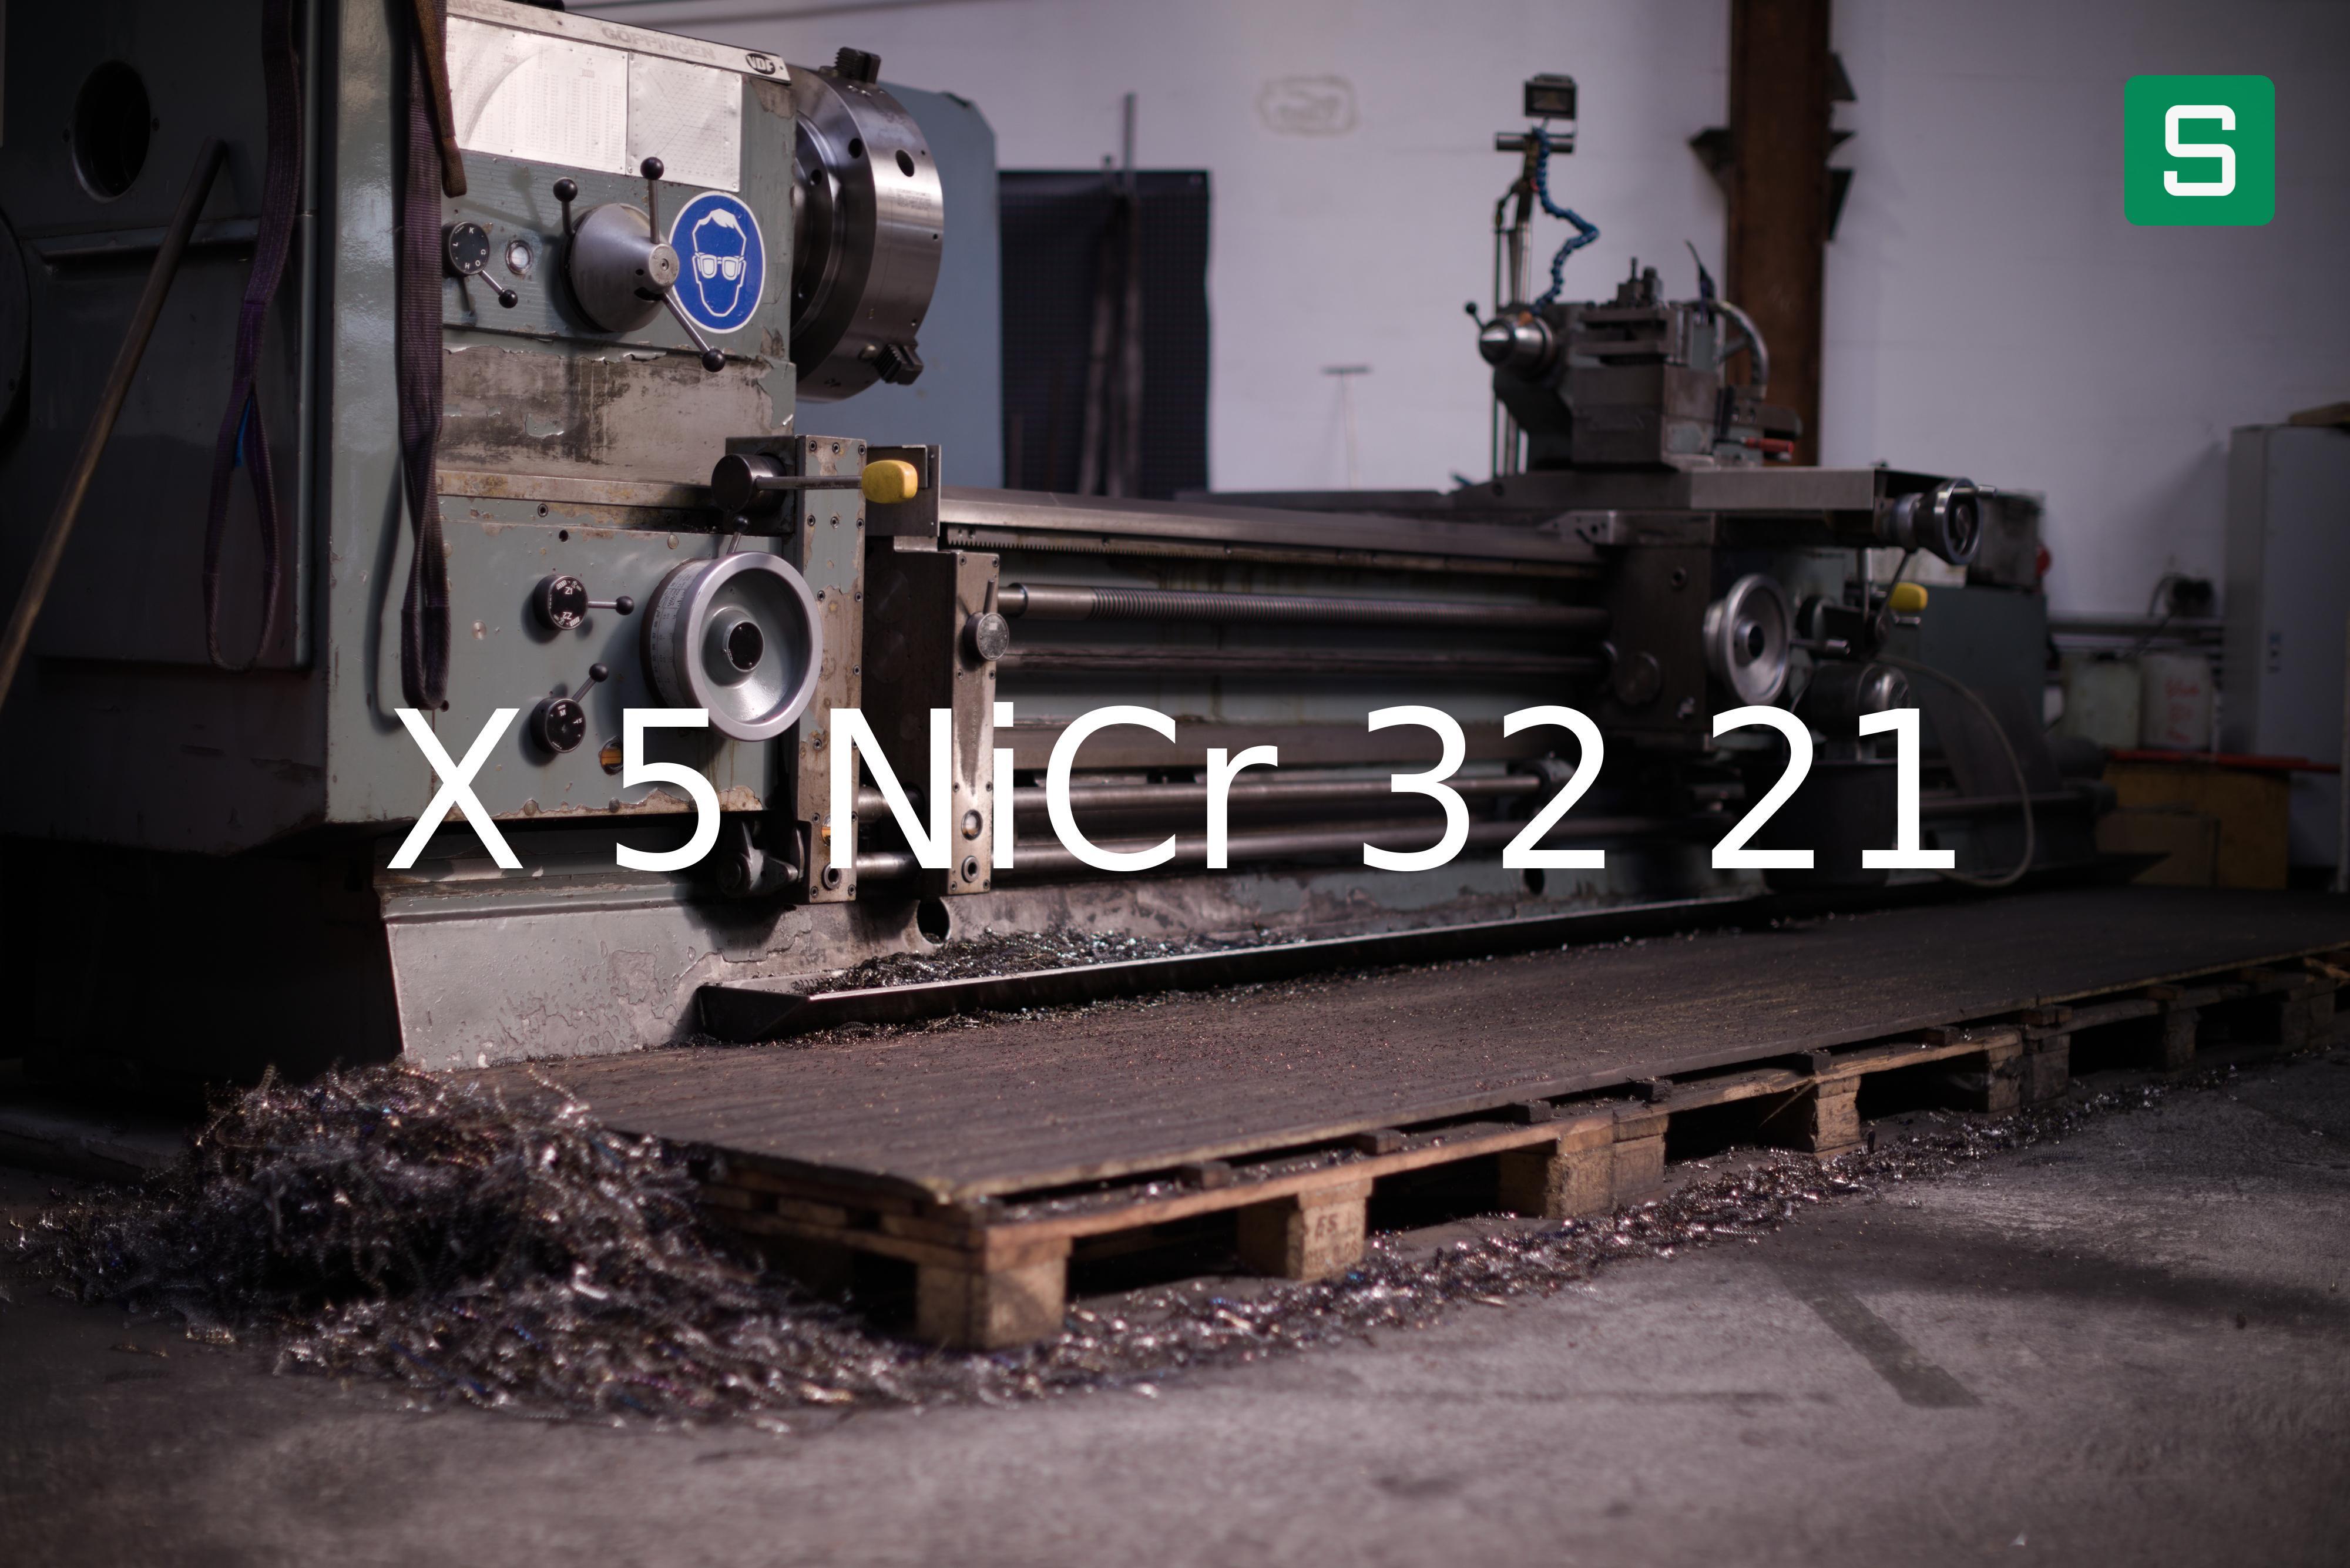 Steel Material: X 5 NiCr 32 21